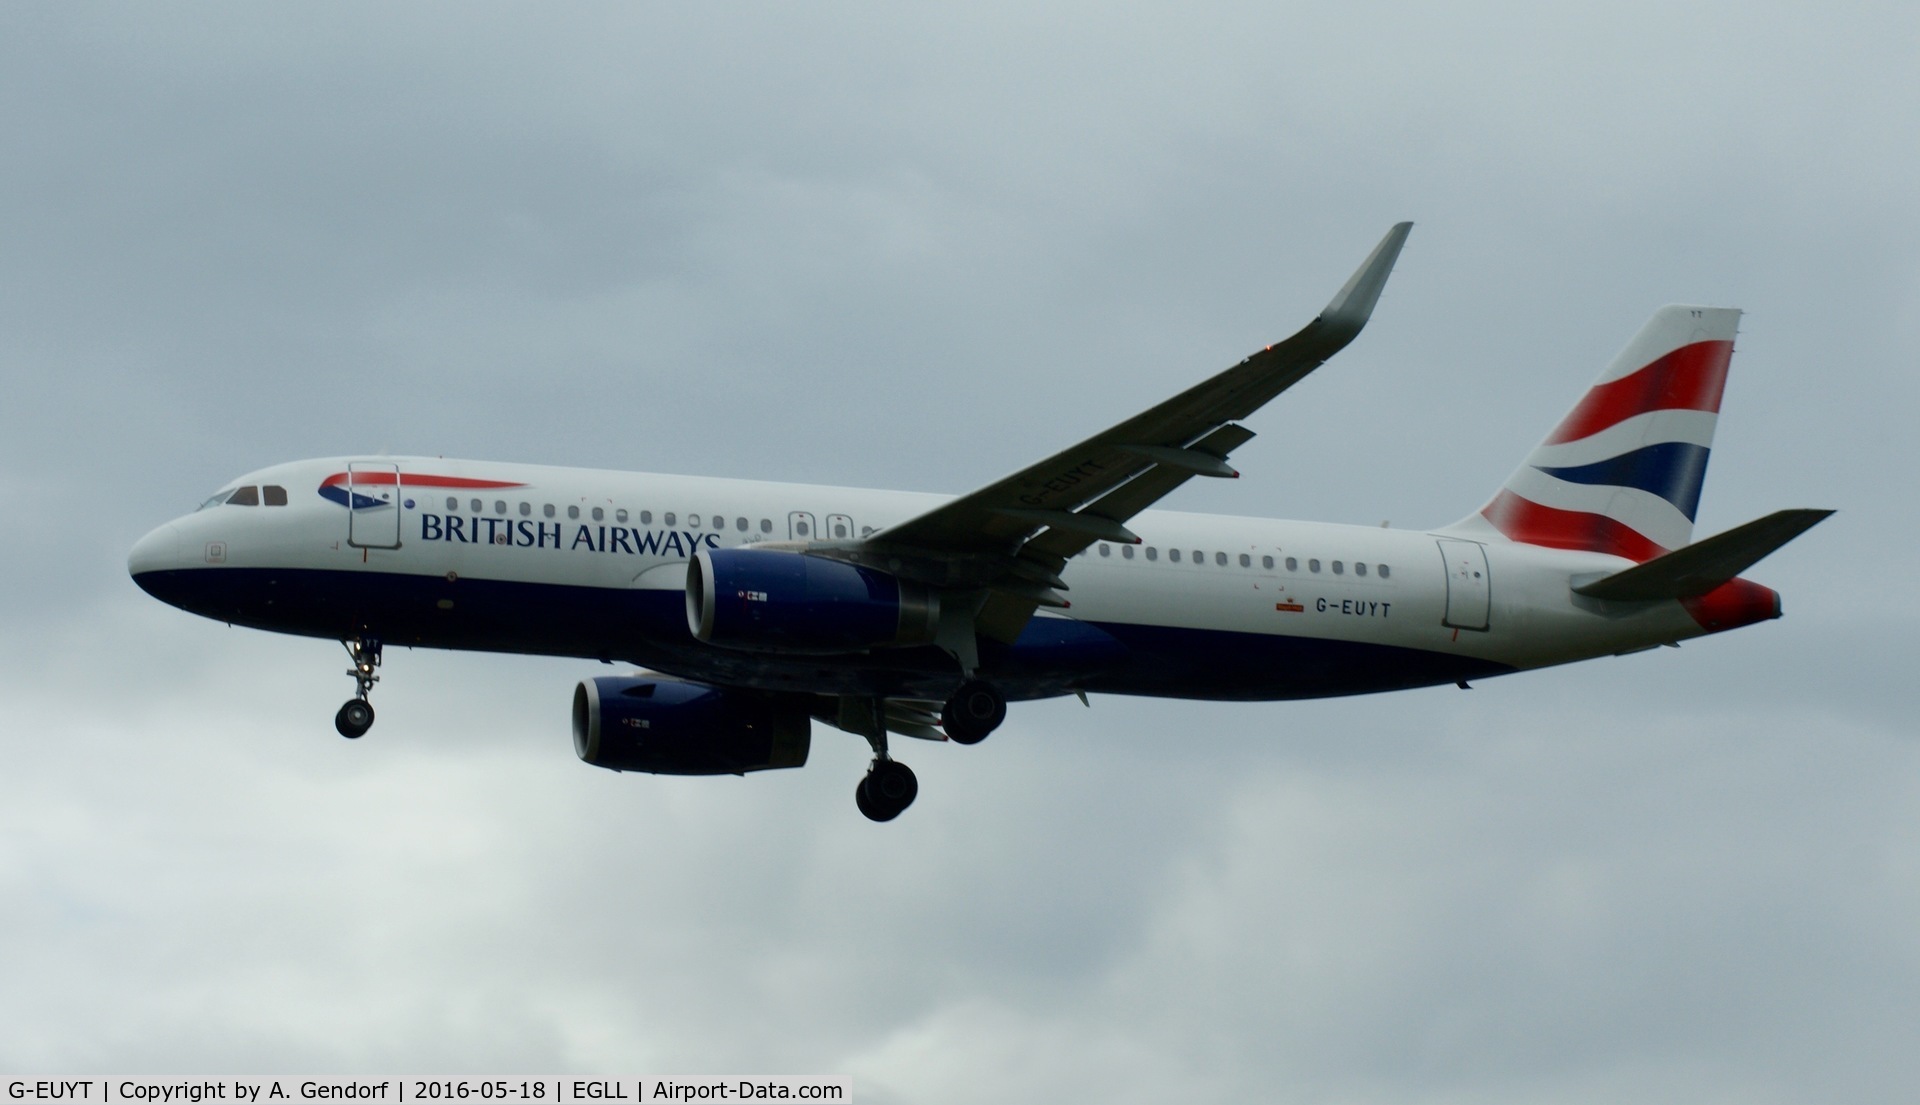 G-EUYT, 2014 Airbus A320-232 C/N 5985, British Airways, is here on finals RWY 27L at London Heathrow(EGLL)